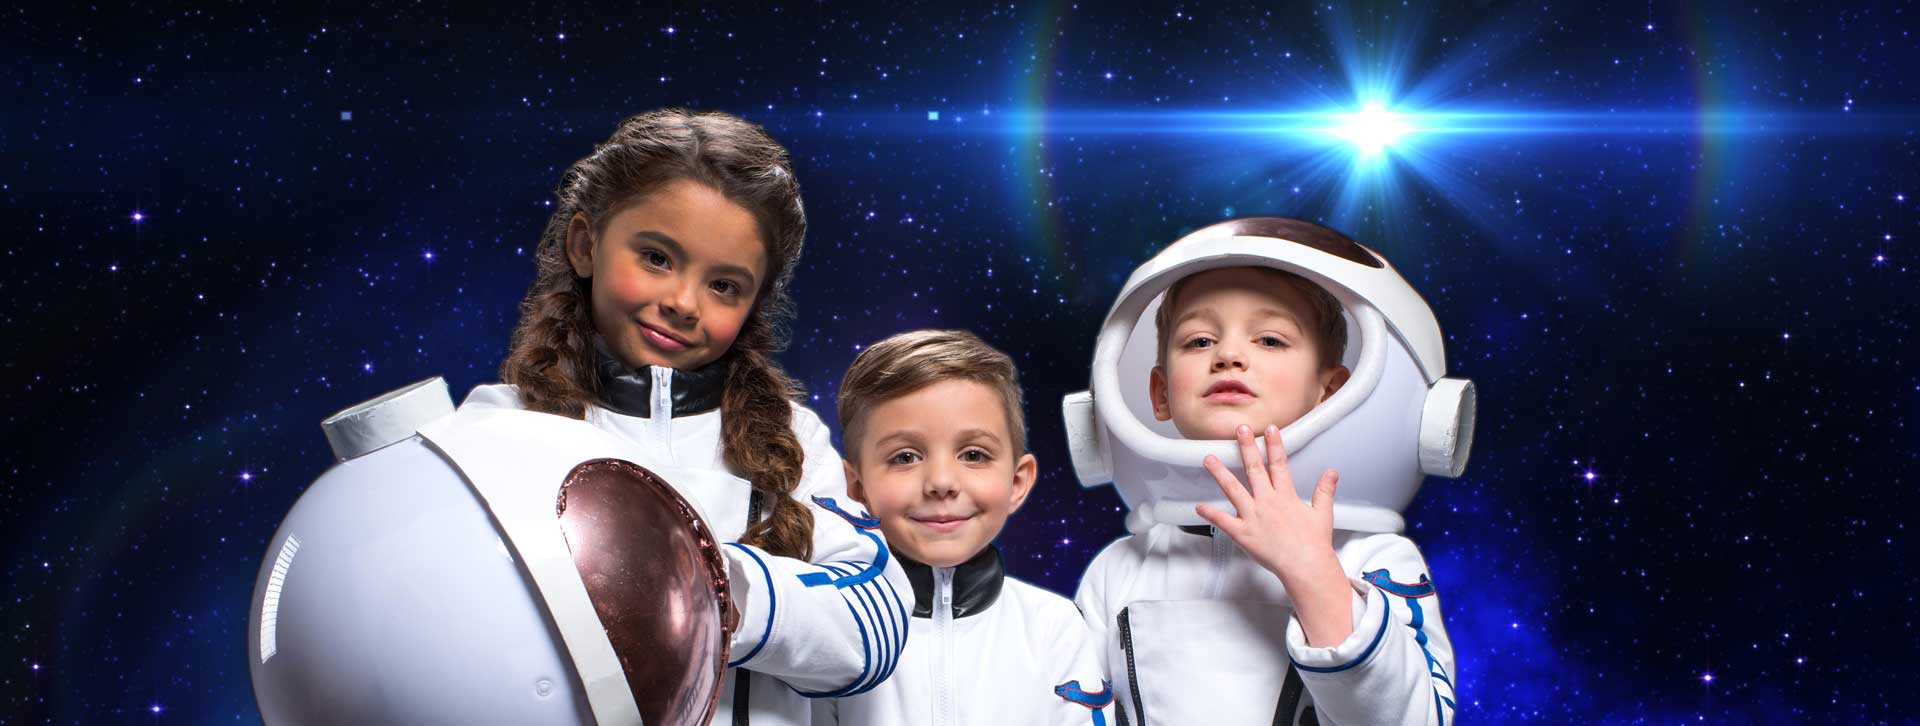 kids dressed as astronauts